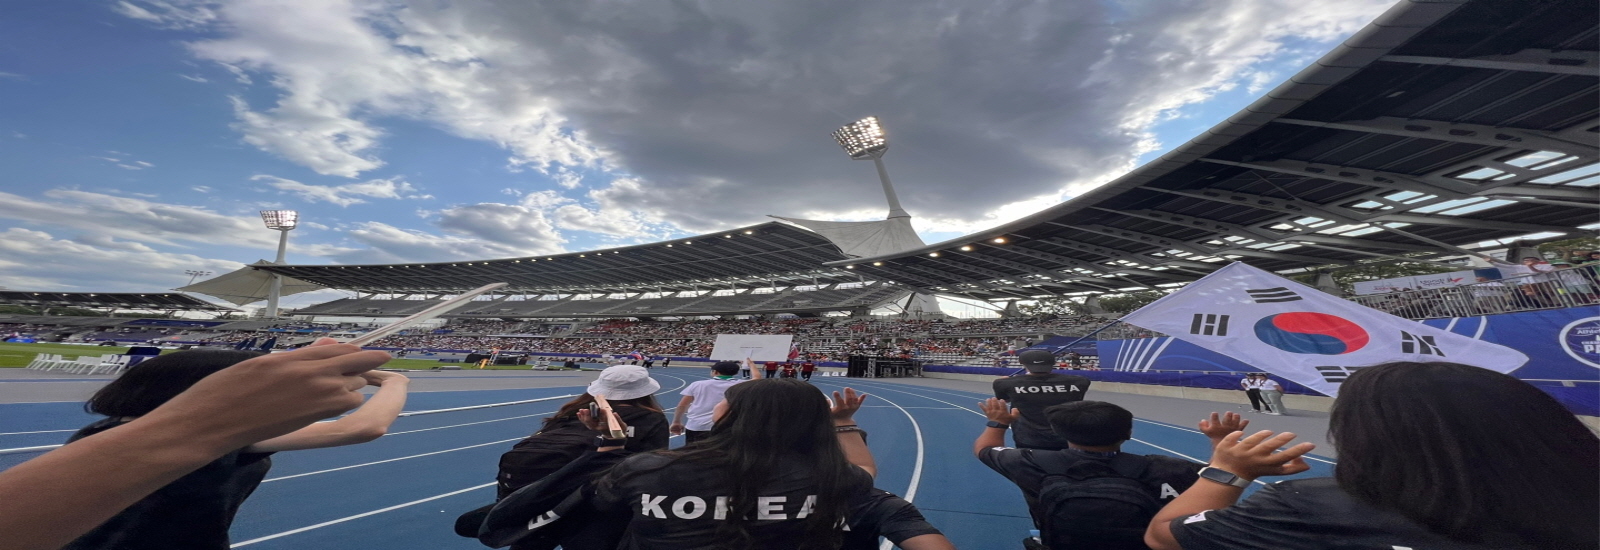 Korea Para Athletics Federation